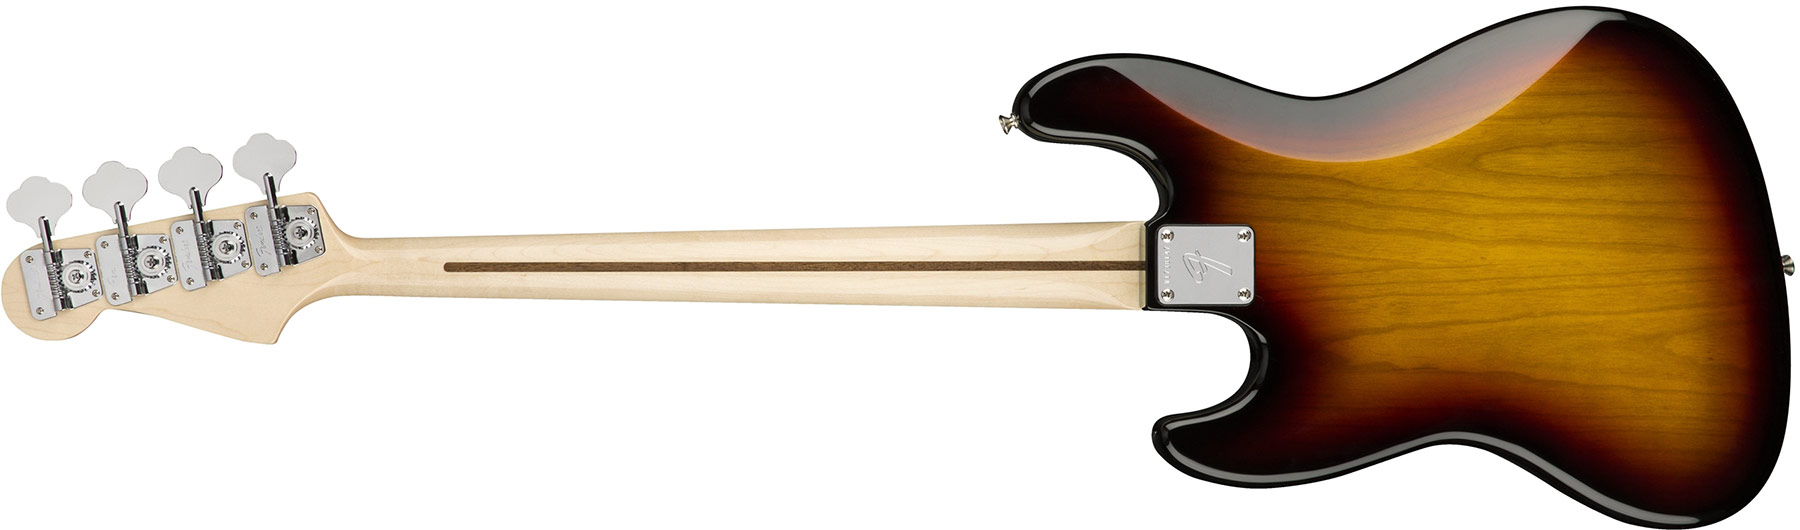 Fender Jazz Bass '70s American Original Usa Mn - 3-color Sunburst - Basse Électrique Solid Body - Variation 2